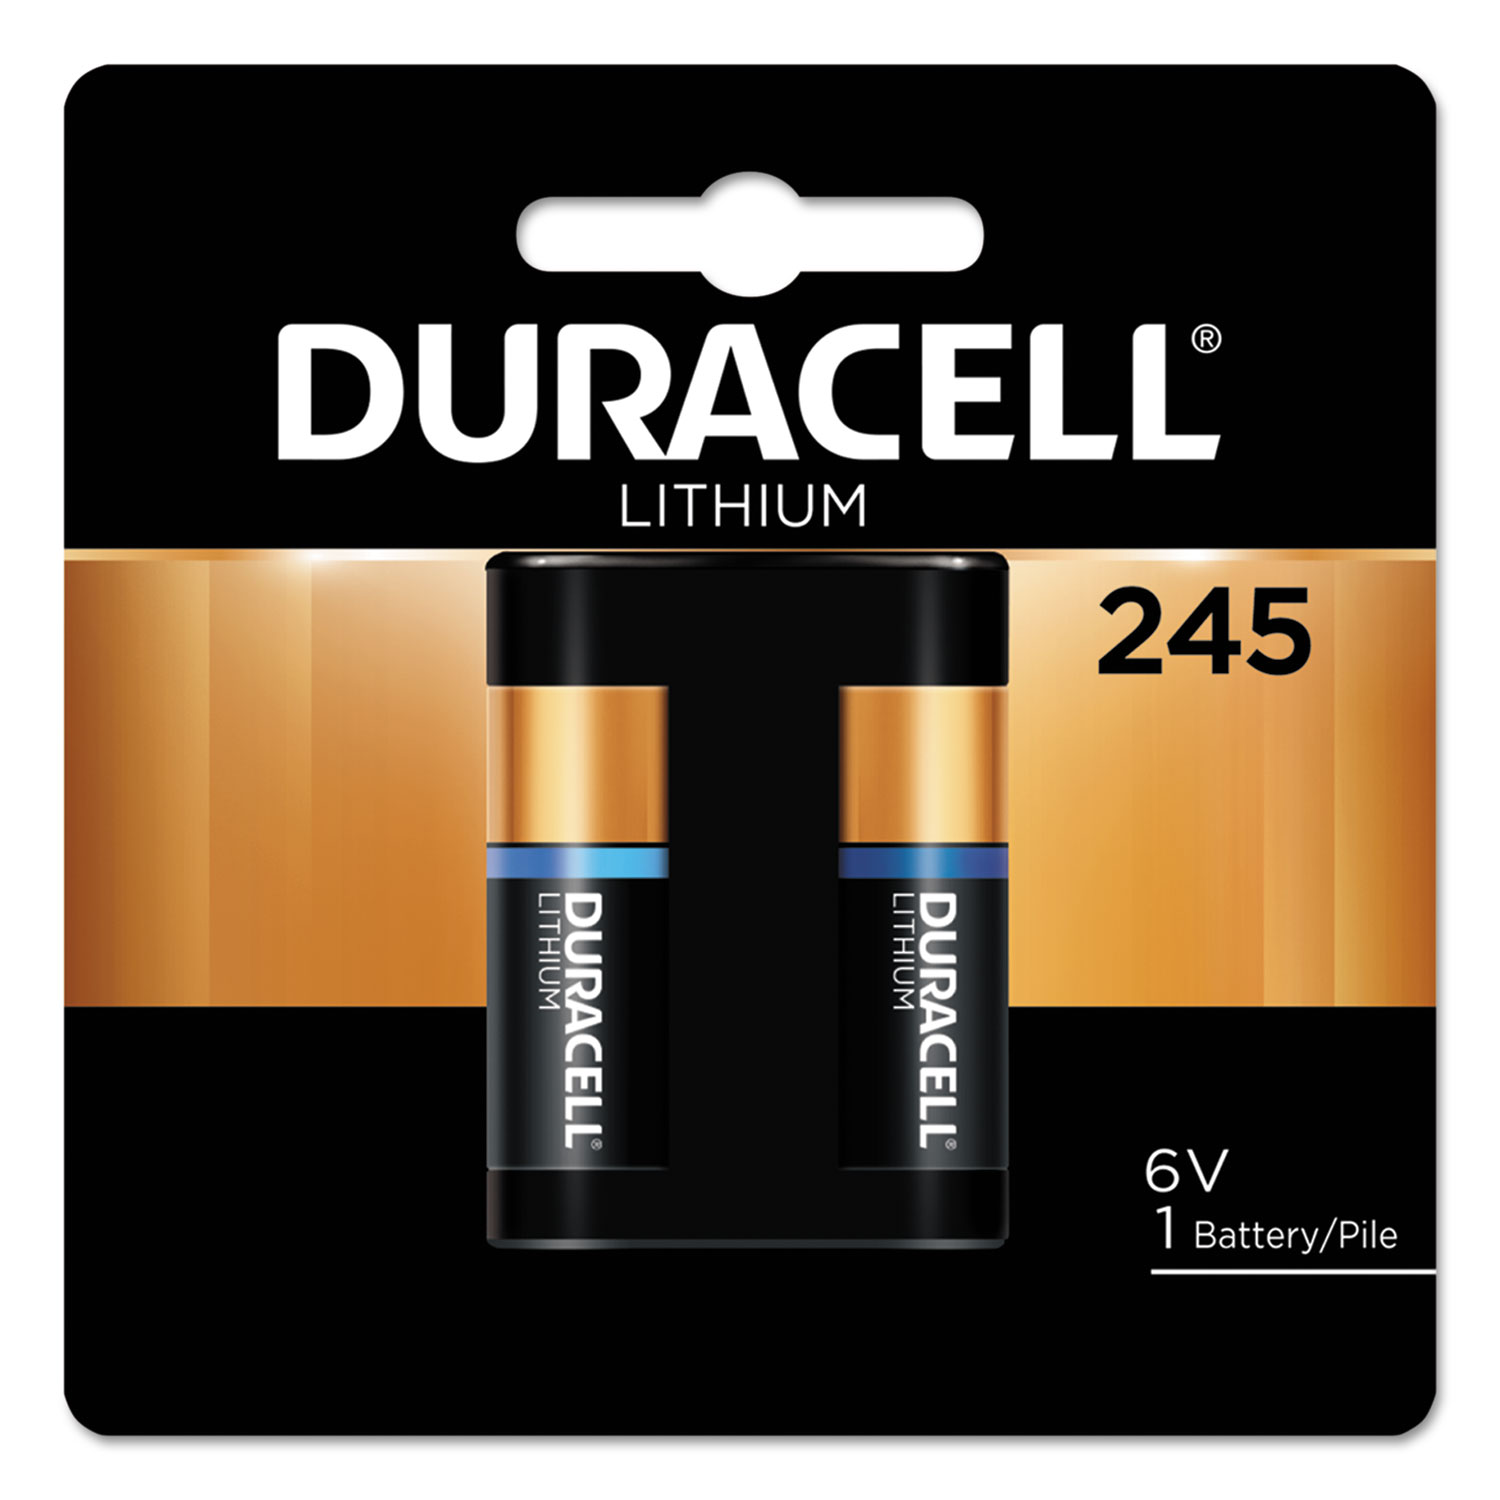  Duracell DL245BPK Specialty High-Power Lithium Battery, 245, 6V (DURDL245BPK) 